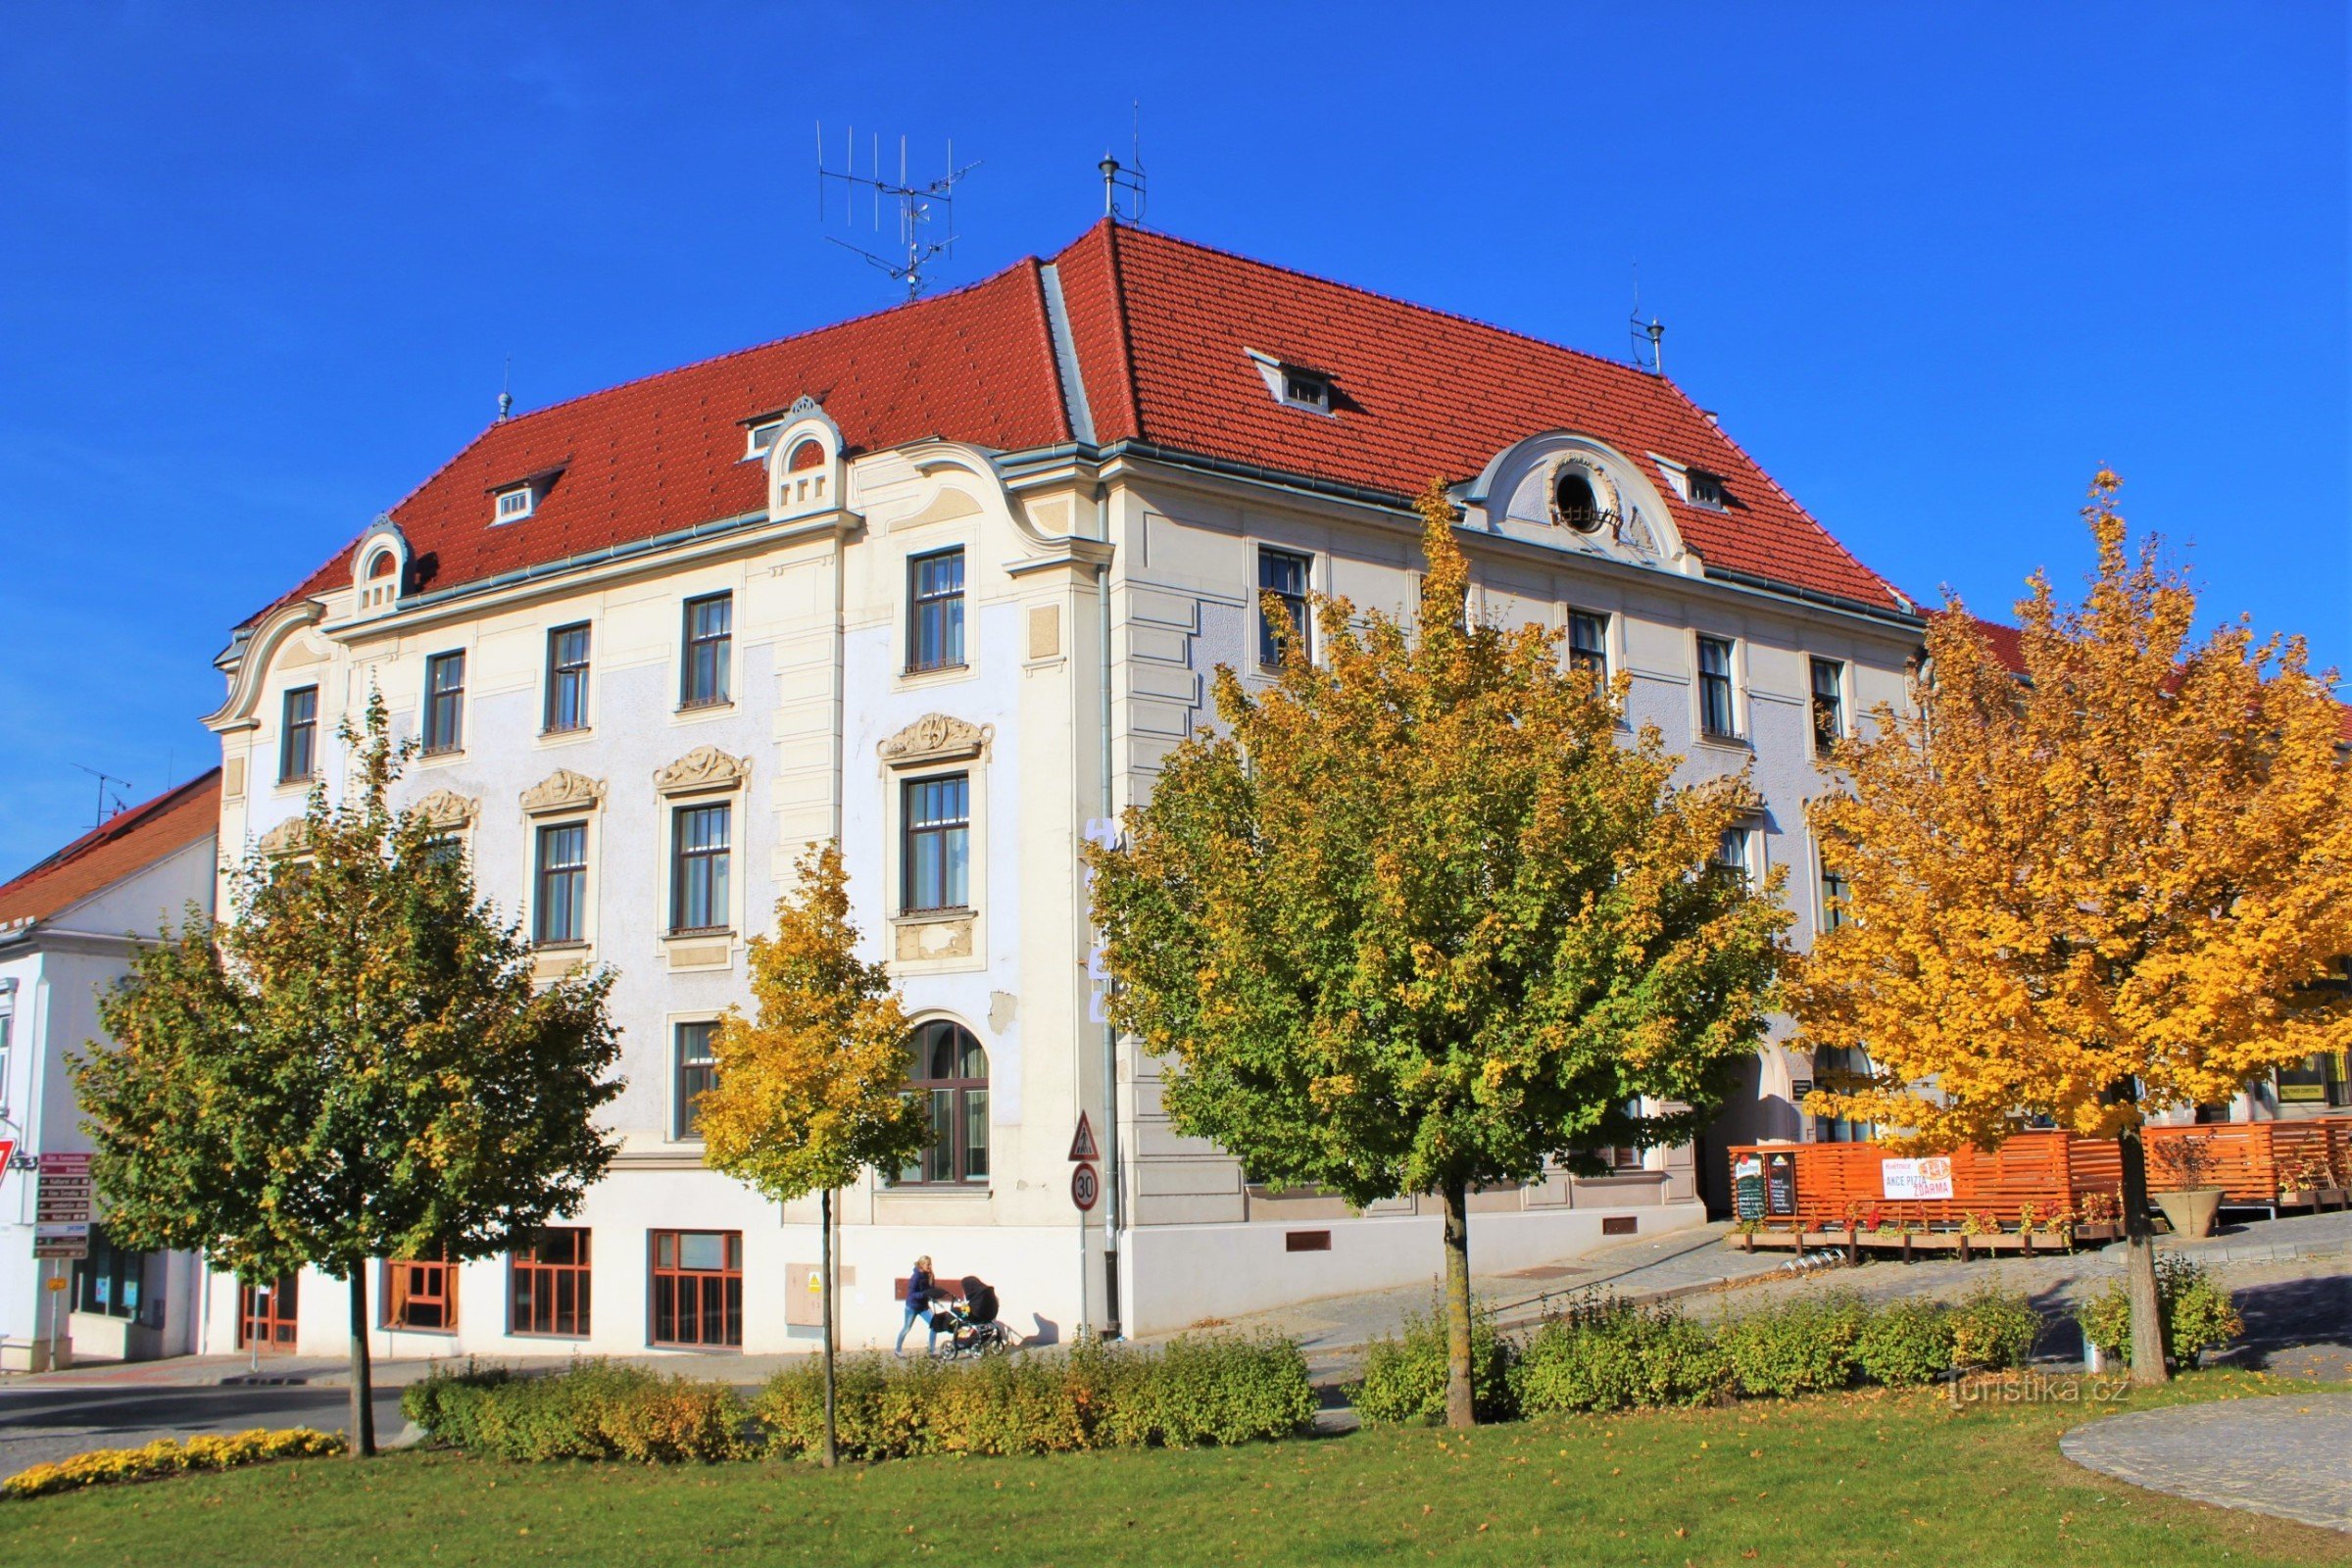 Hôtel Květnice sur la place de Tišnov